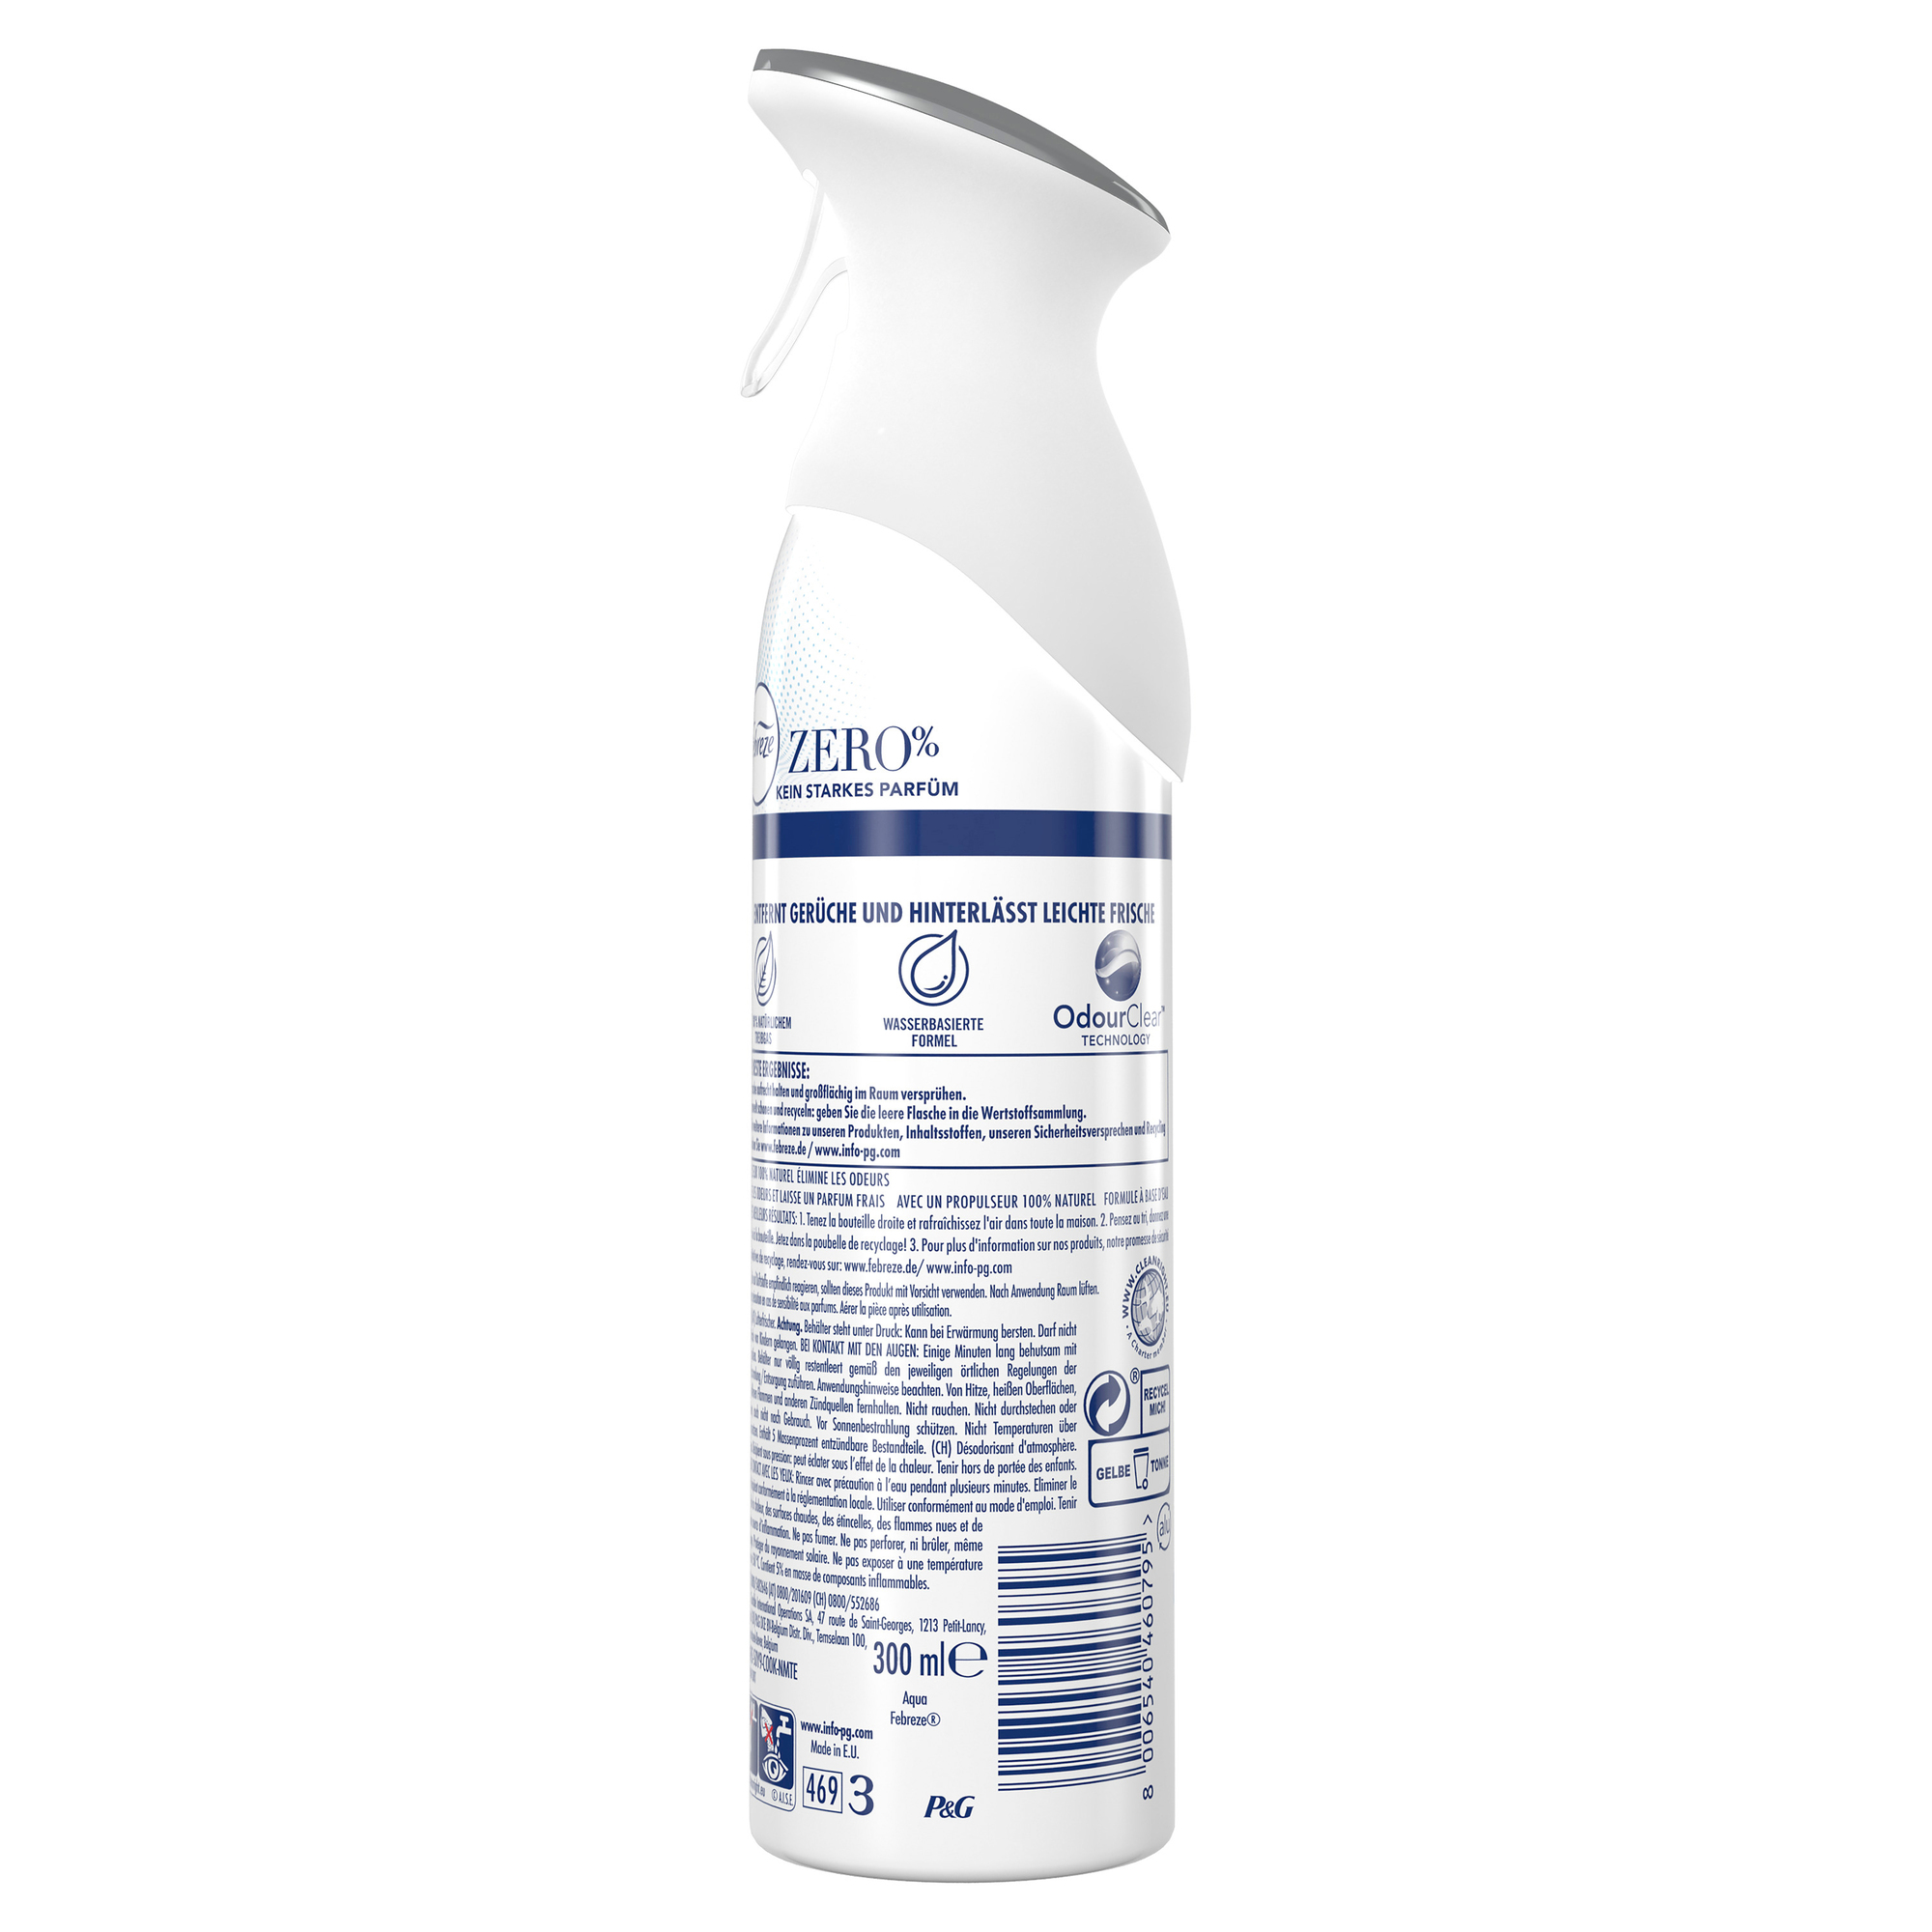 Produktbewertungen: Febreze ZERO% Aqua 300ml Lufterfrischer